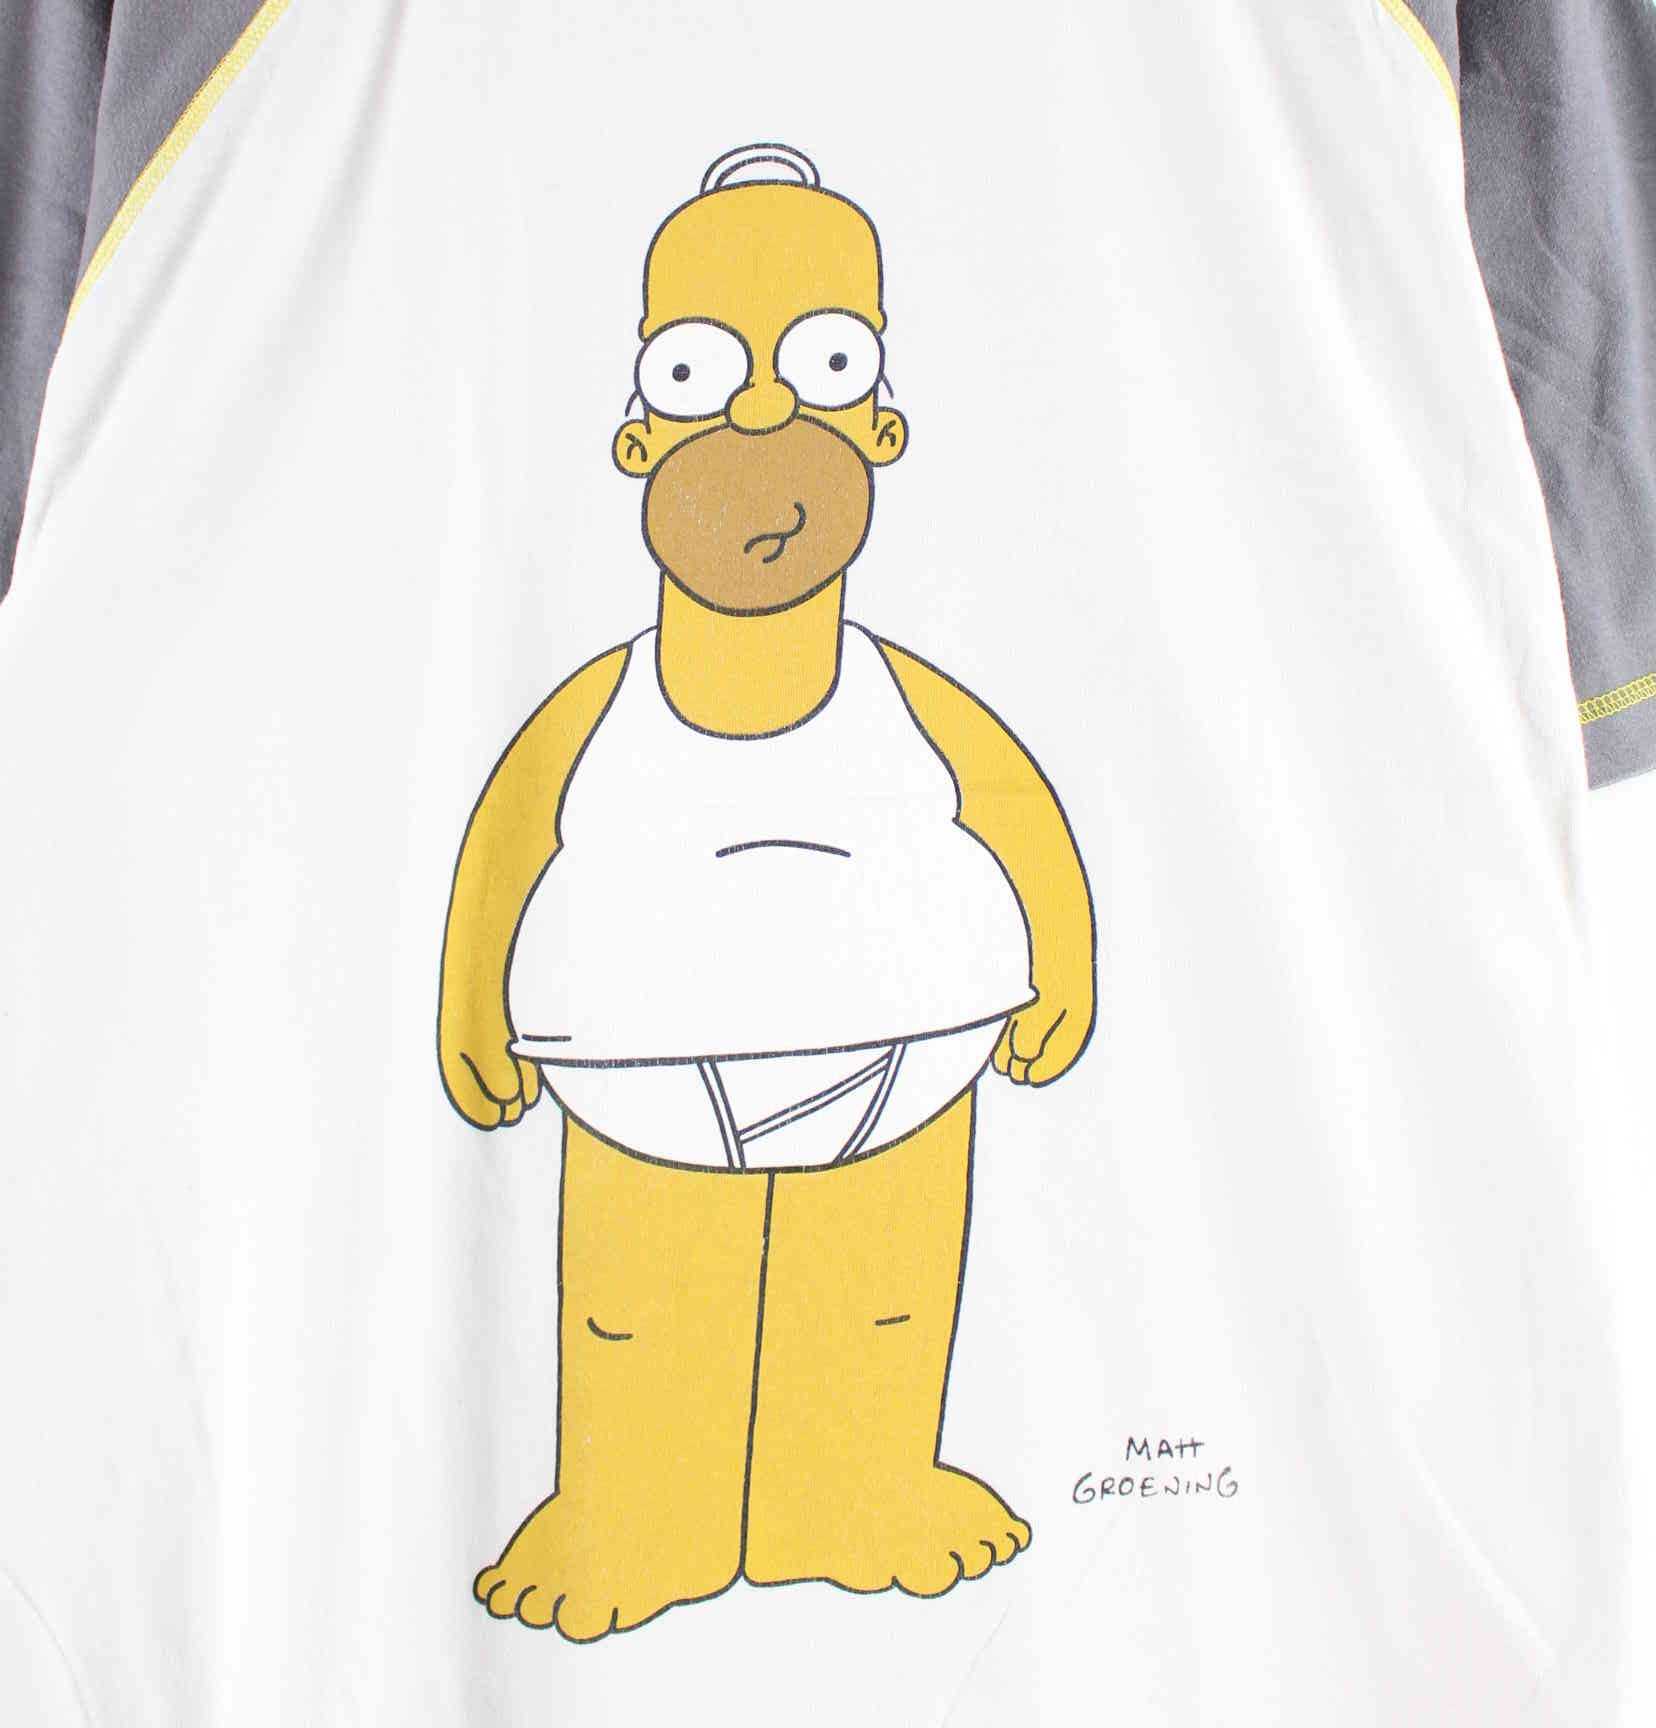 The Simpsons y2k Homer Print T-Shirt Weiß L (detail image 1)